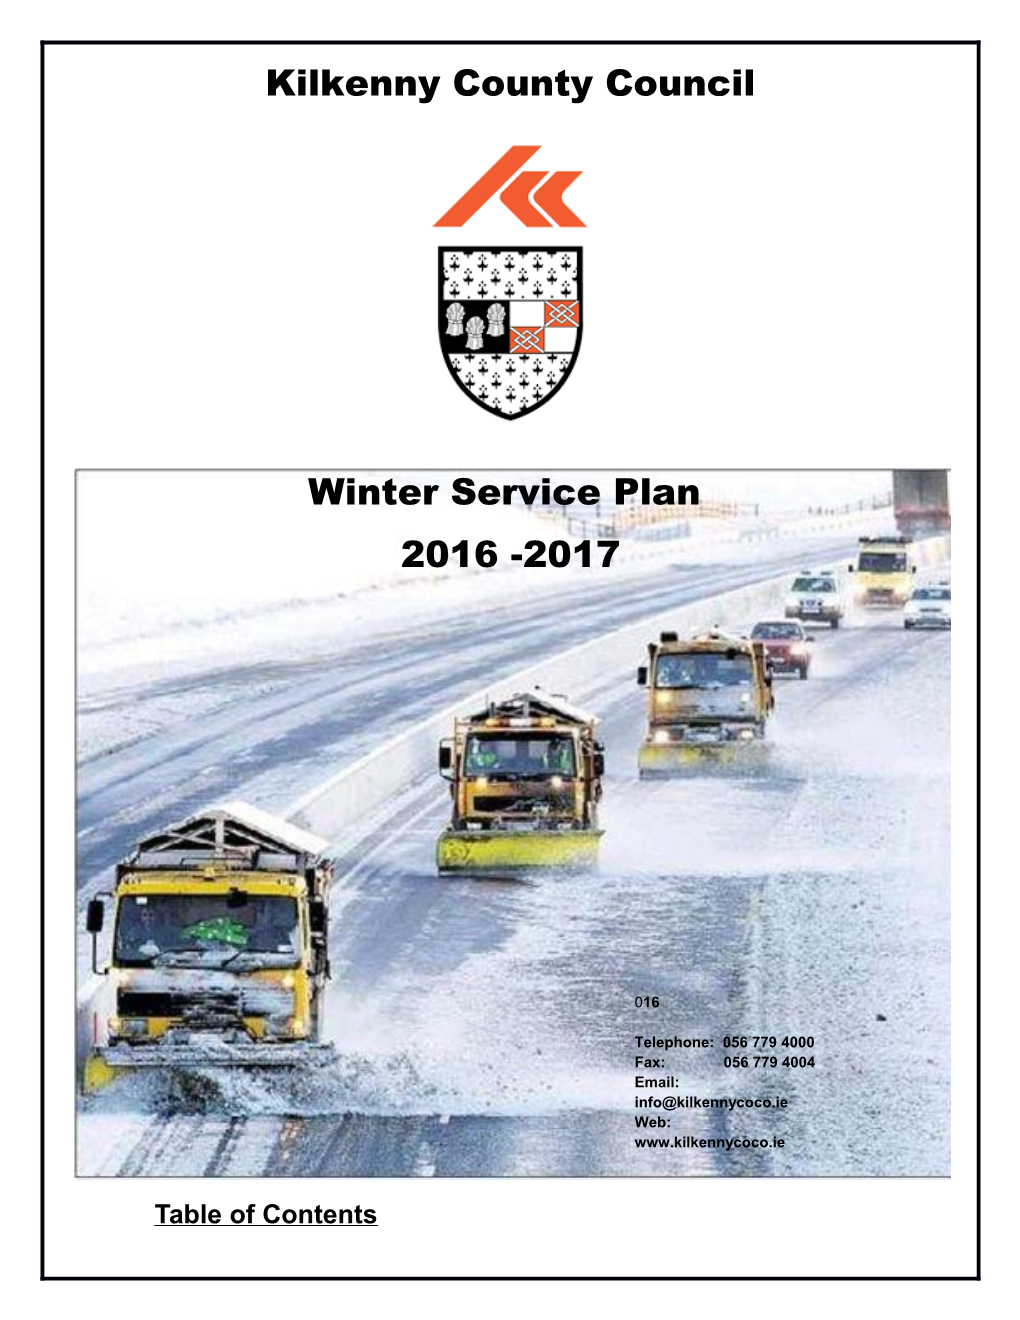 Kilkenny County Council Winter Service Plan 2016/2017